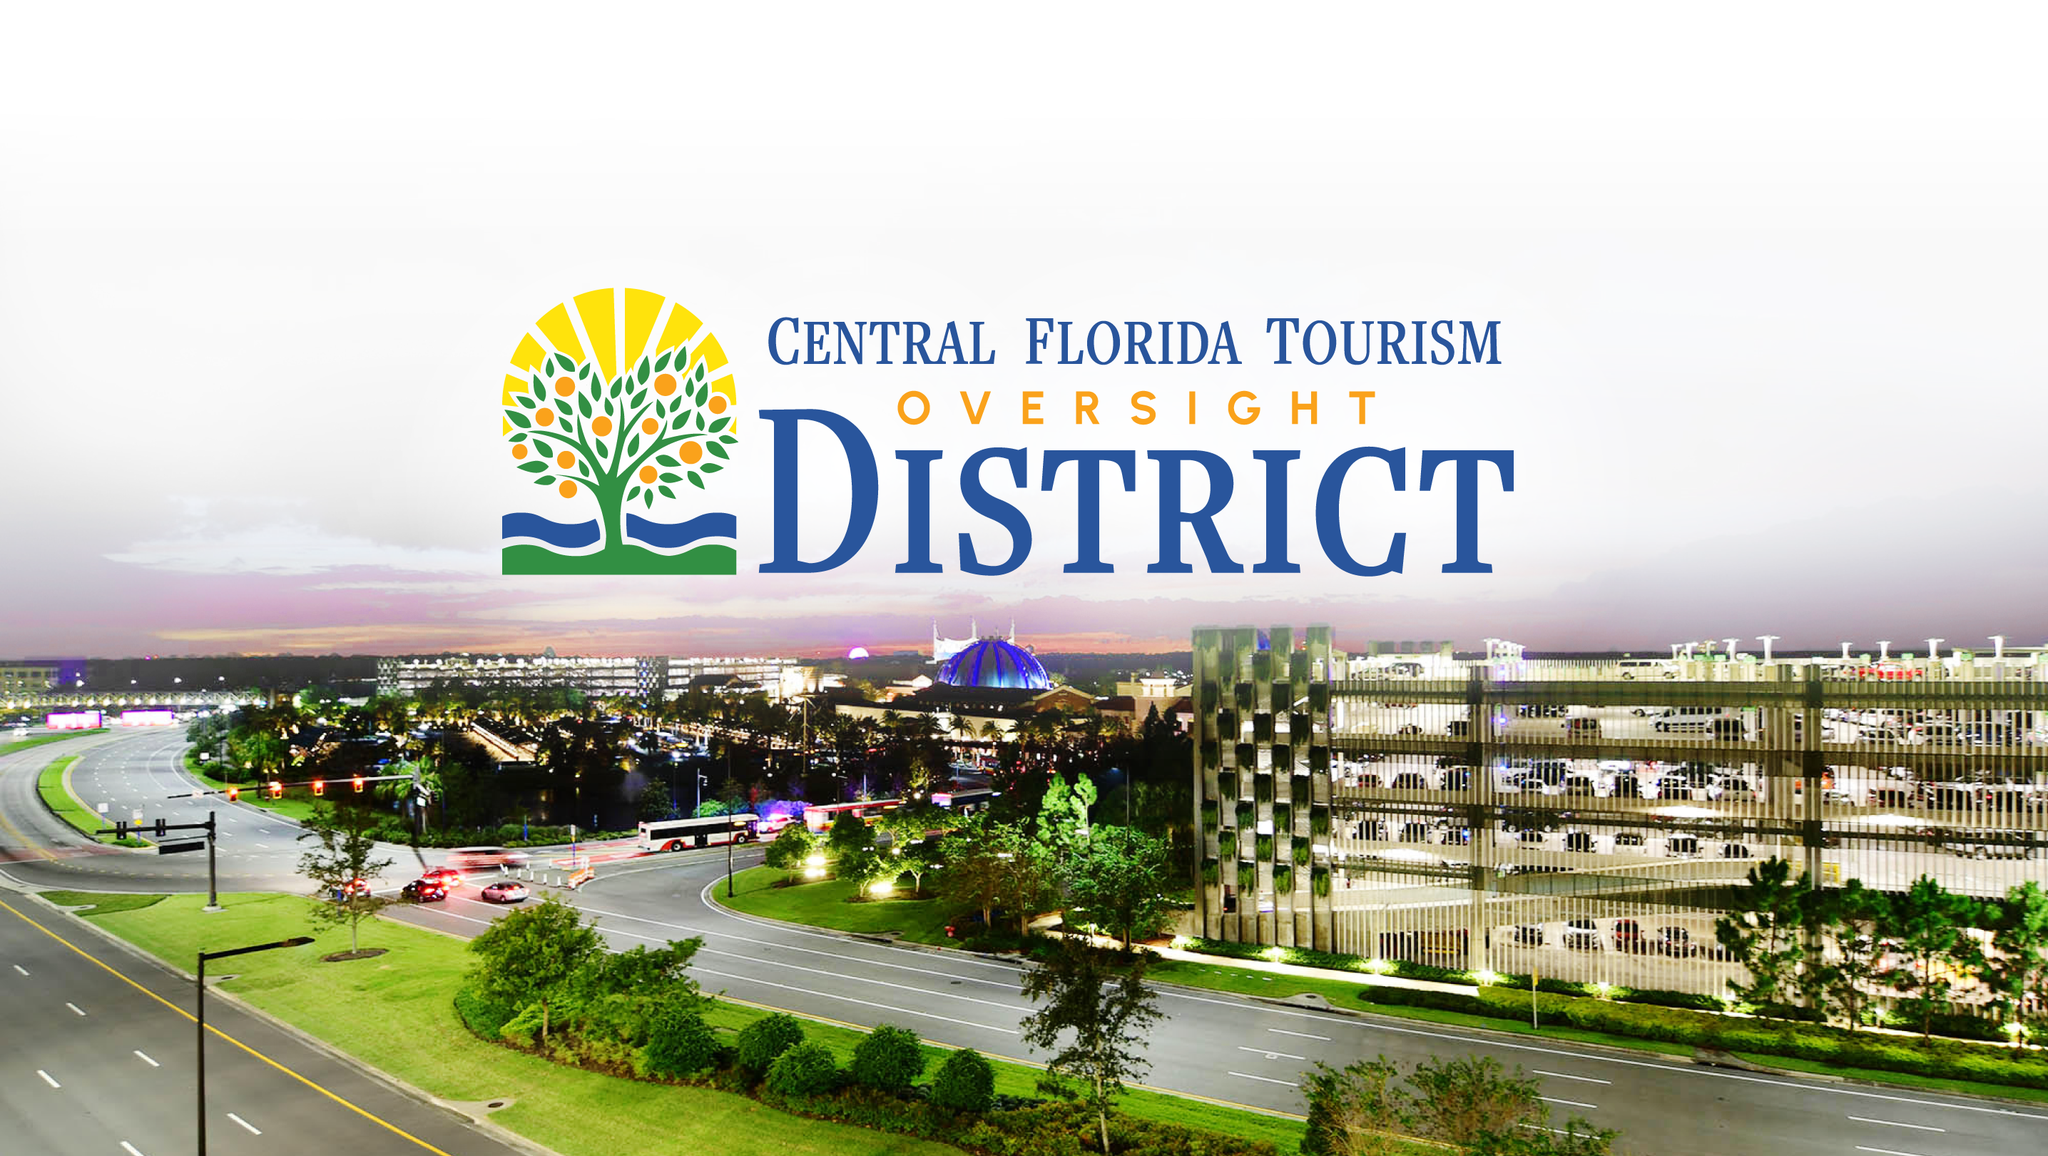 Central Florida Tourism Oversight District